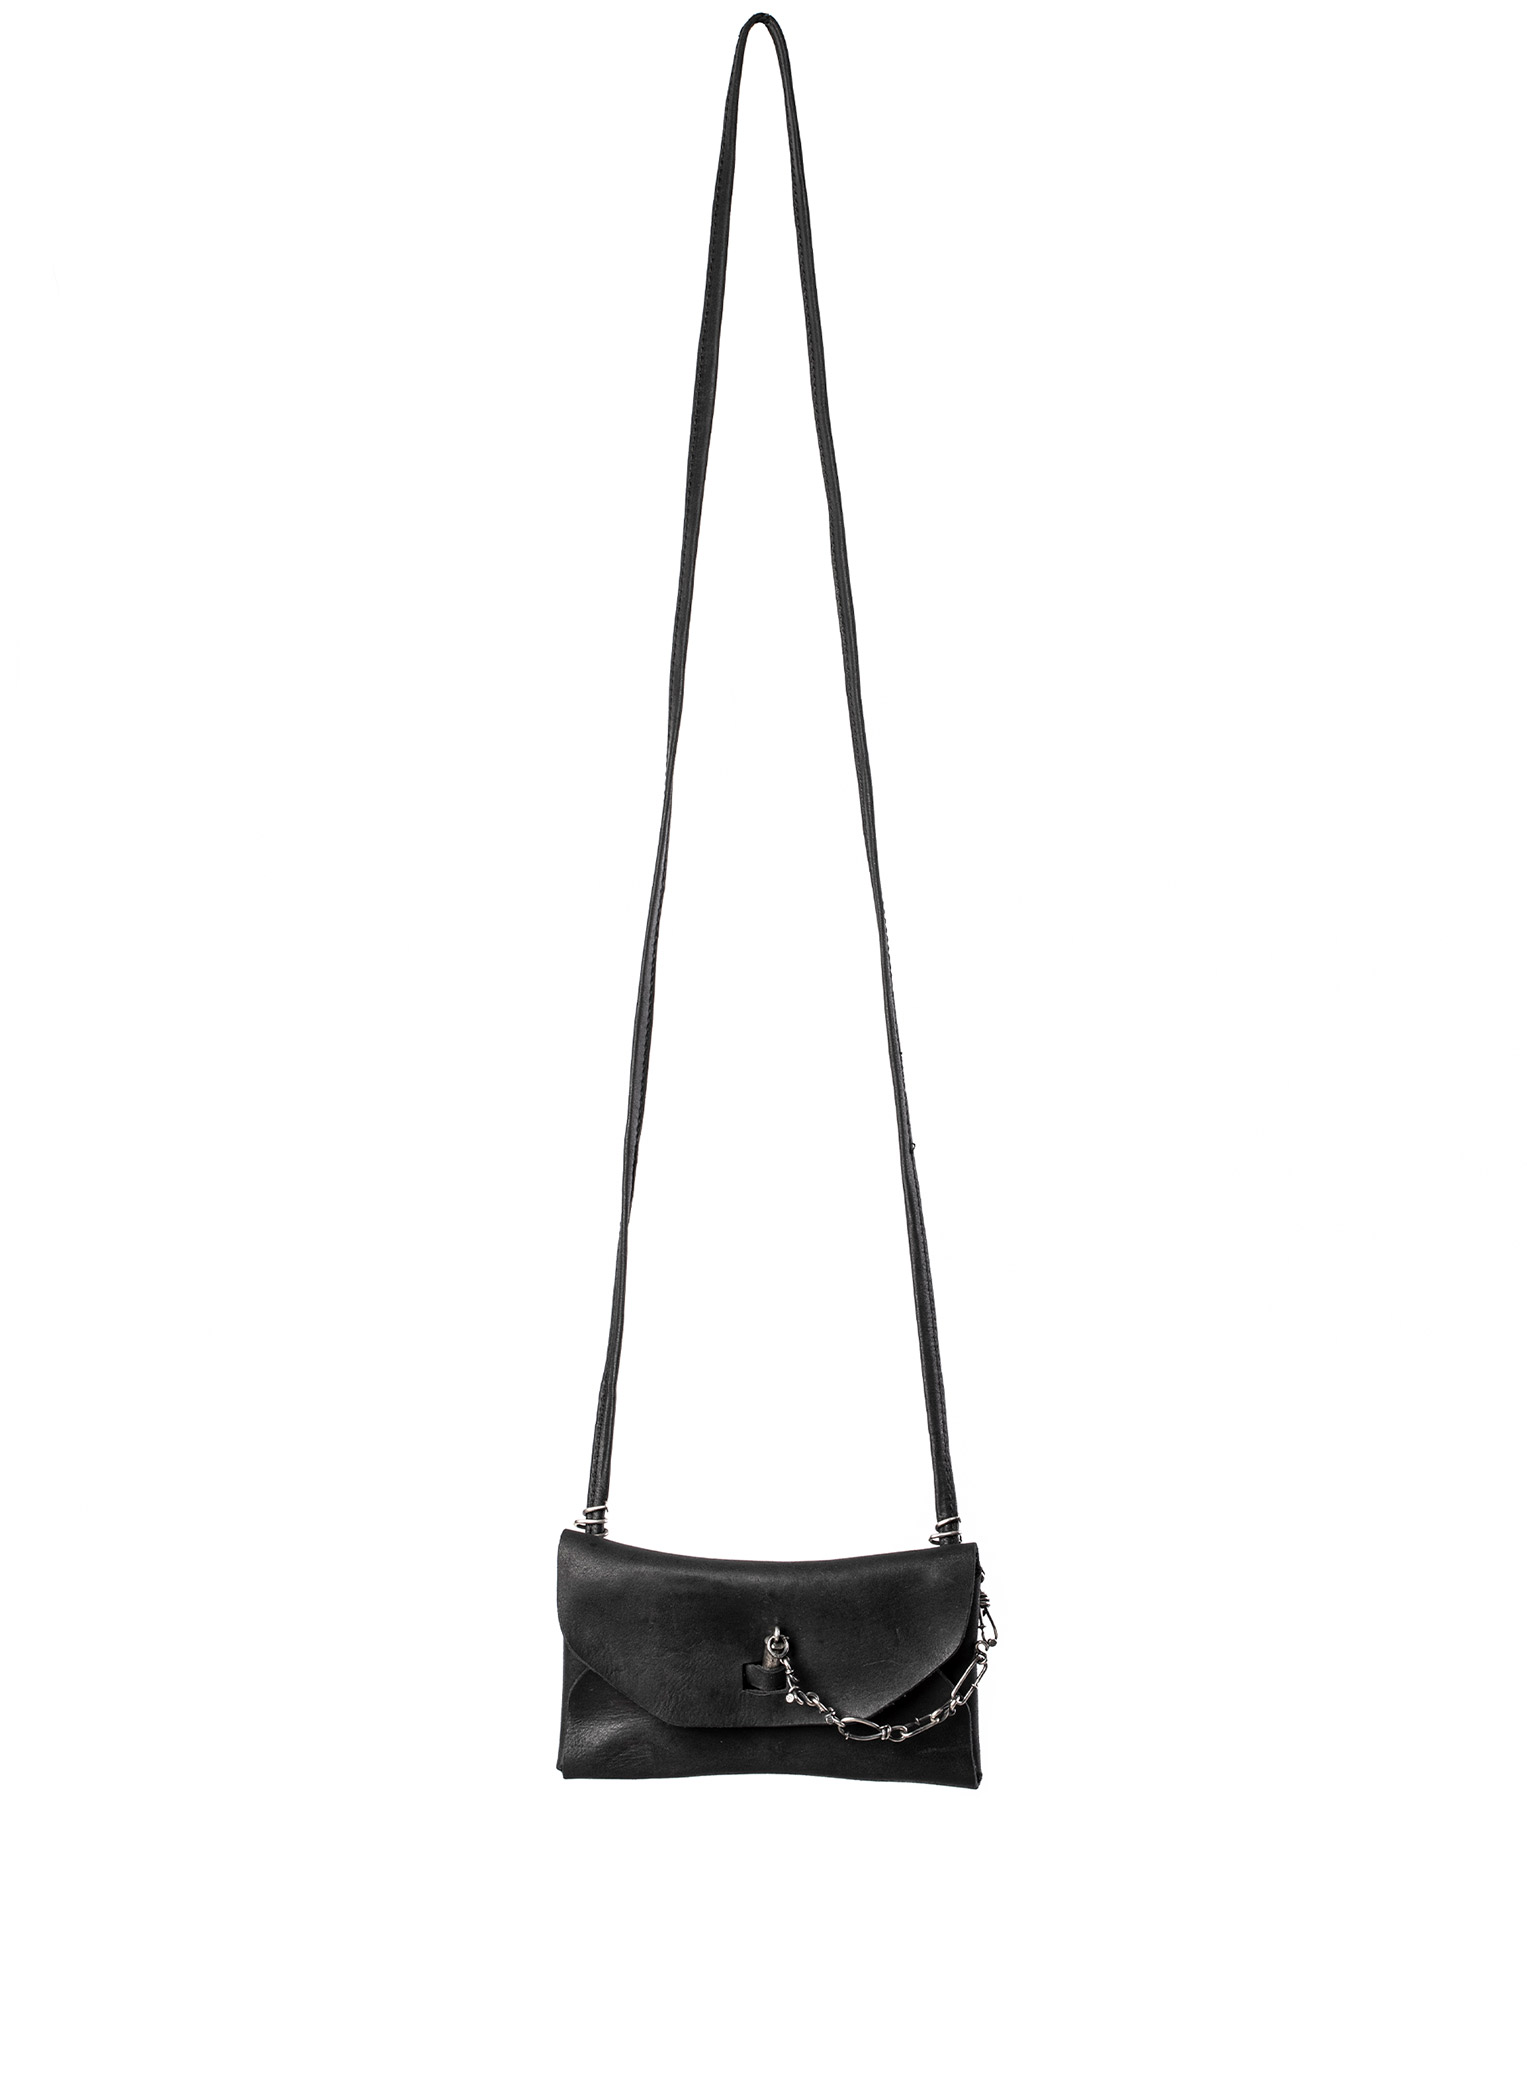 hide-m | GUIDI GD01 Small Shoulder Envelope Bag, black calf leather